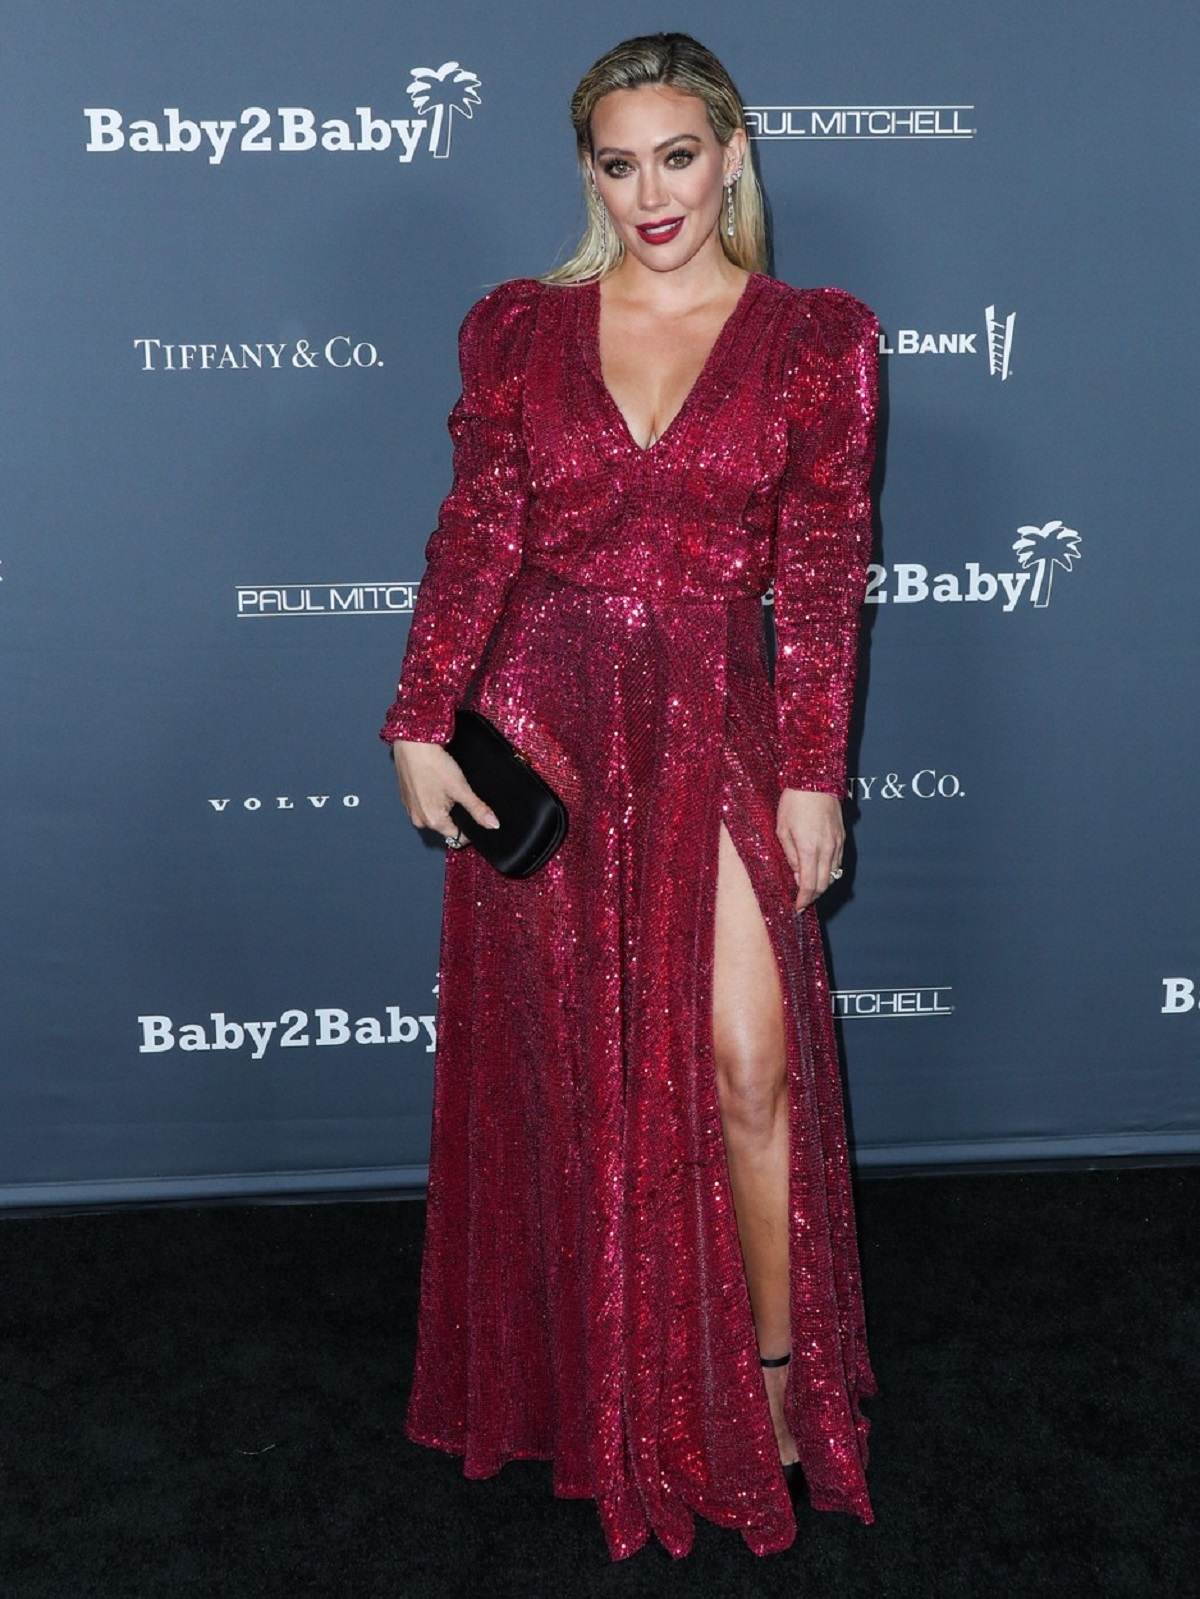 Hilary Duff într-o rochie roșie cu paiete pe covorul roșu la Gala Baby2Baby 2021